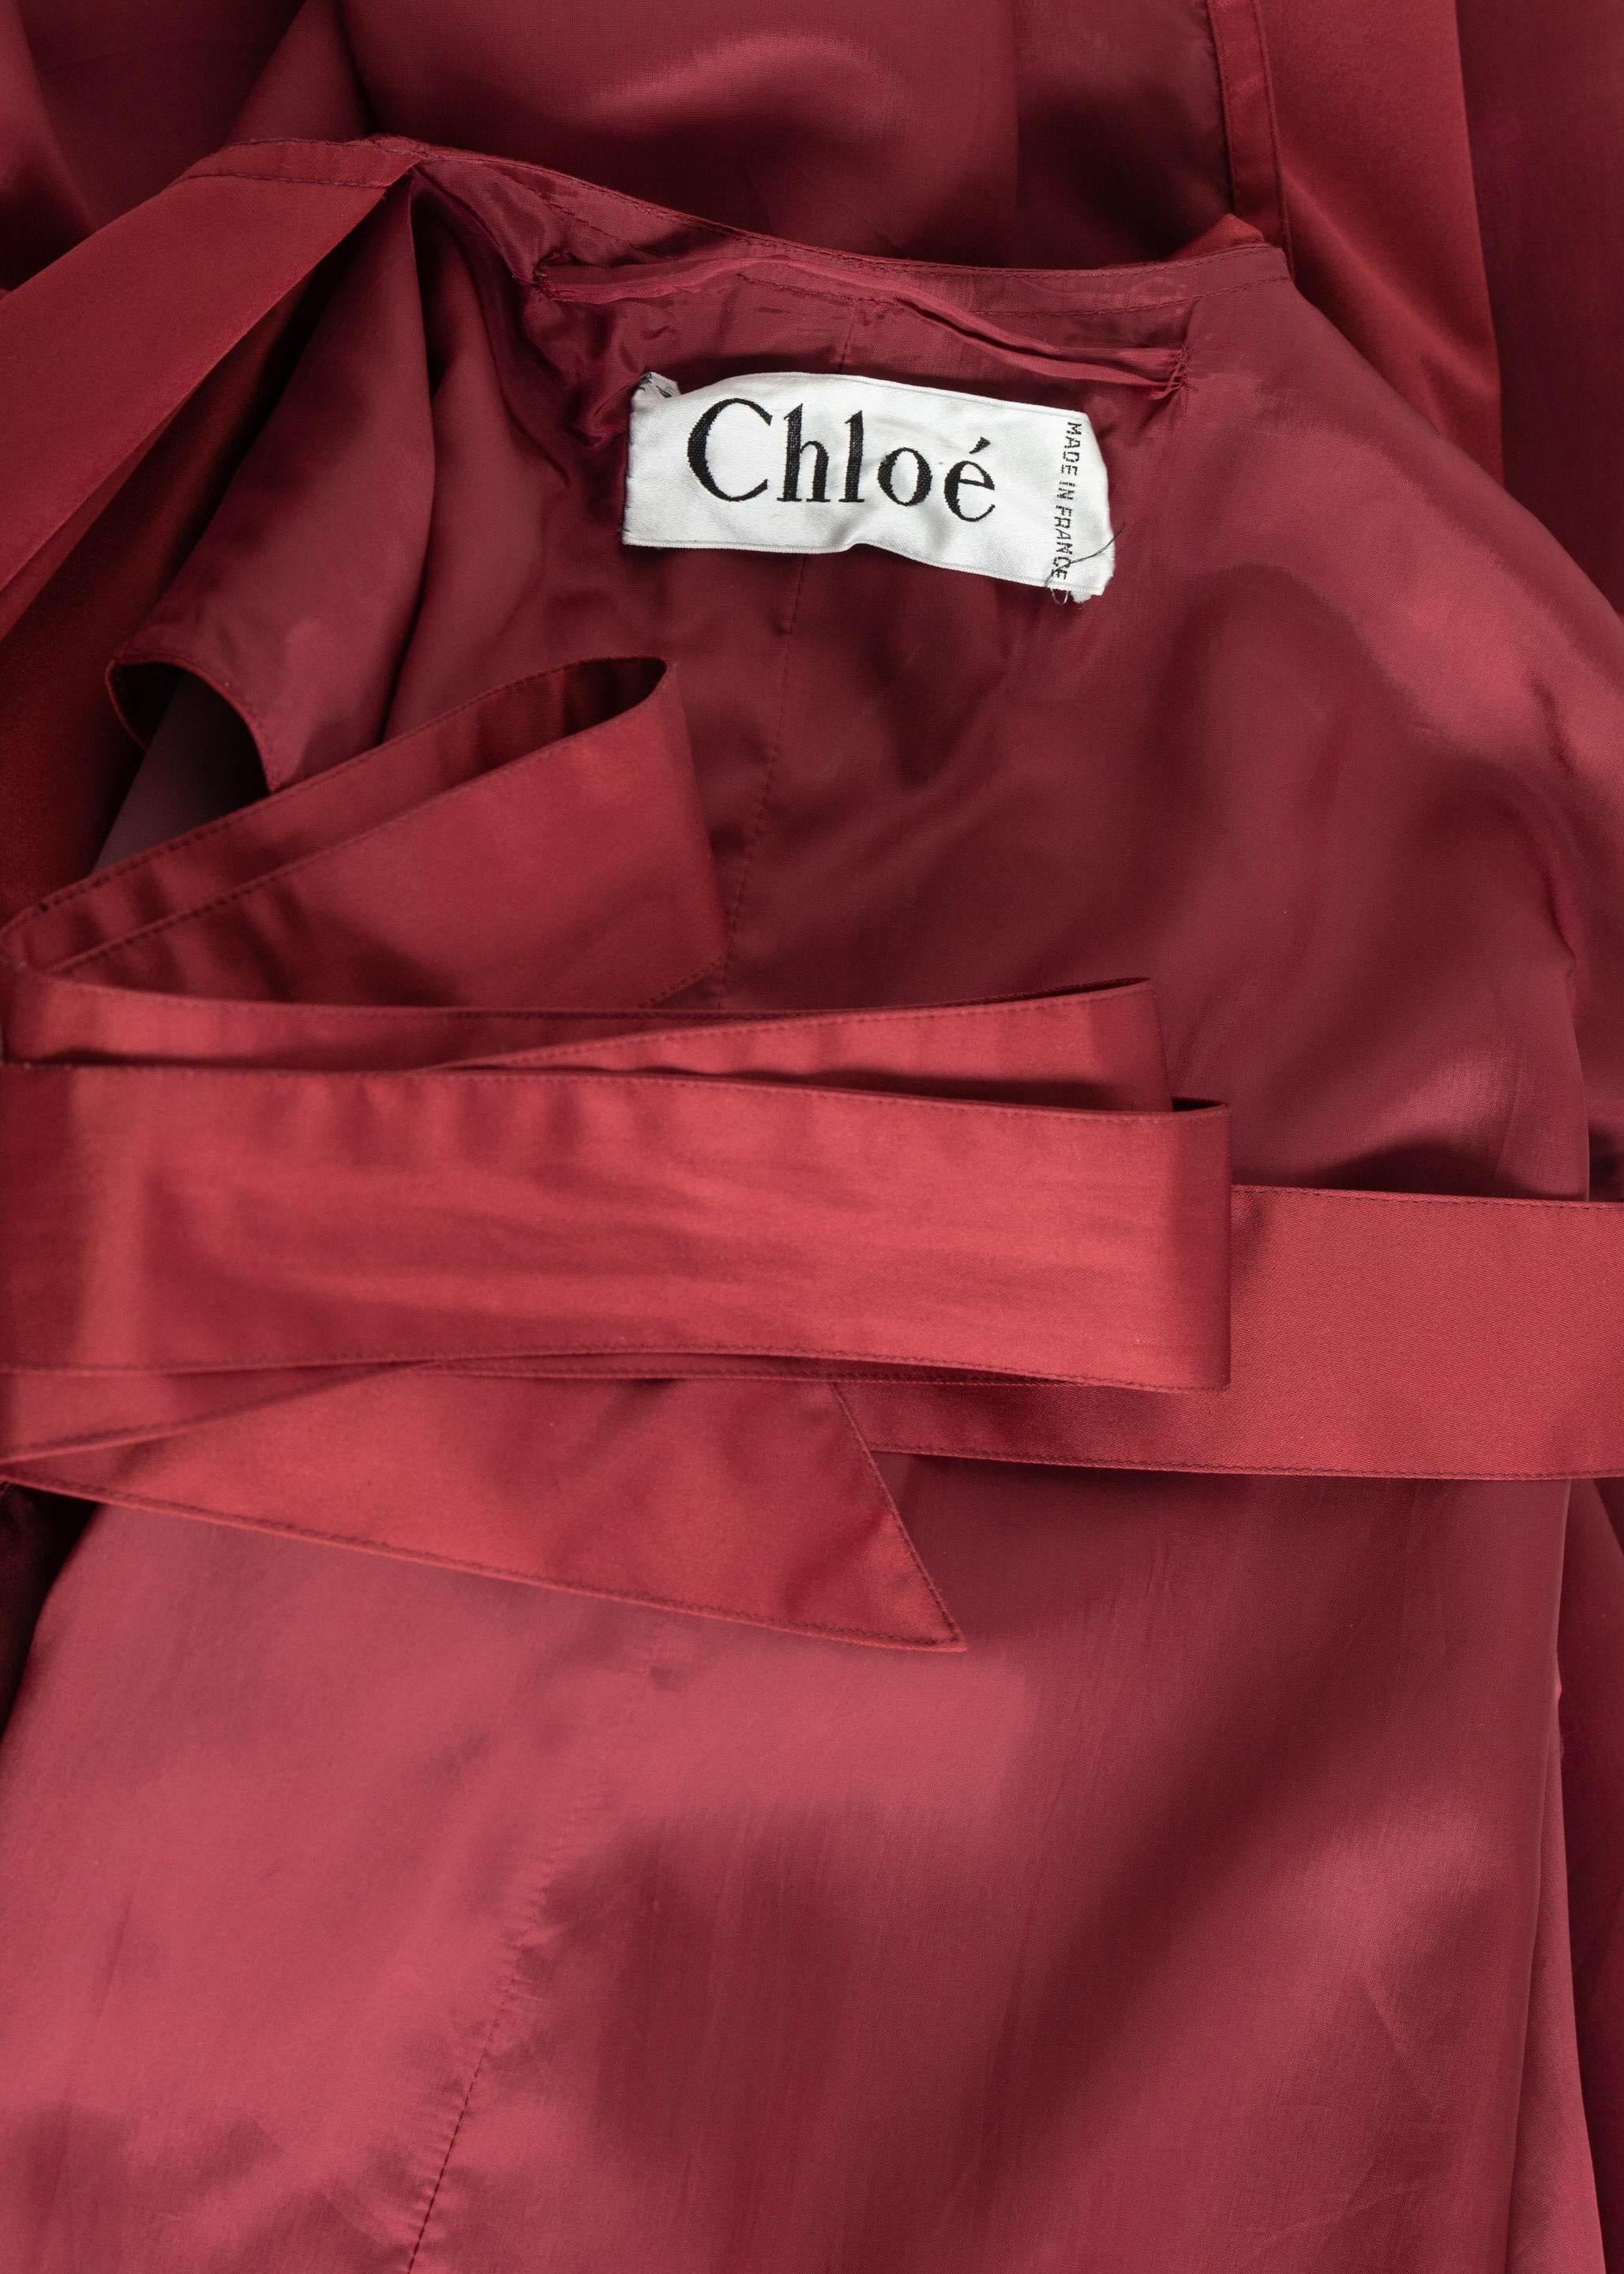 Chloé karl Lagerfeld Bordeaux Gabardine Belted Cape Trench Coat, 1980s For Sale 3